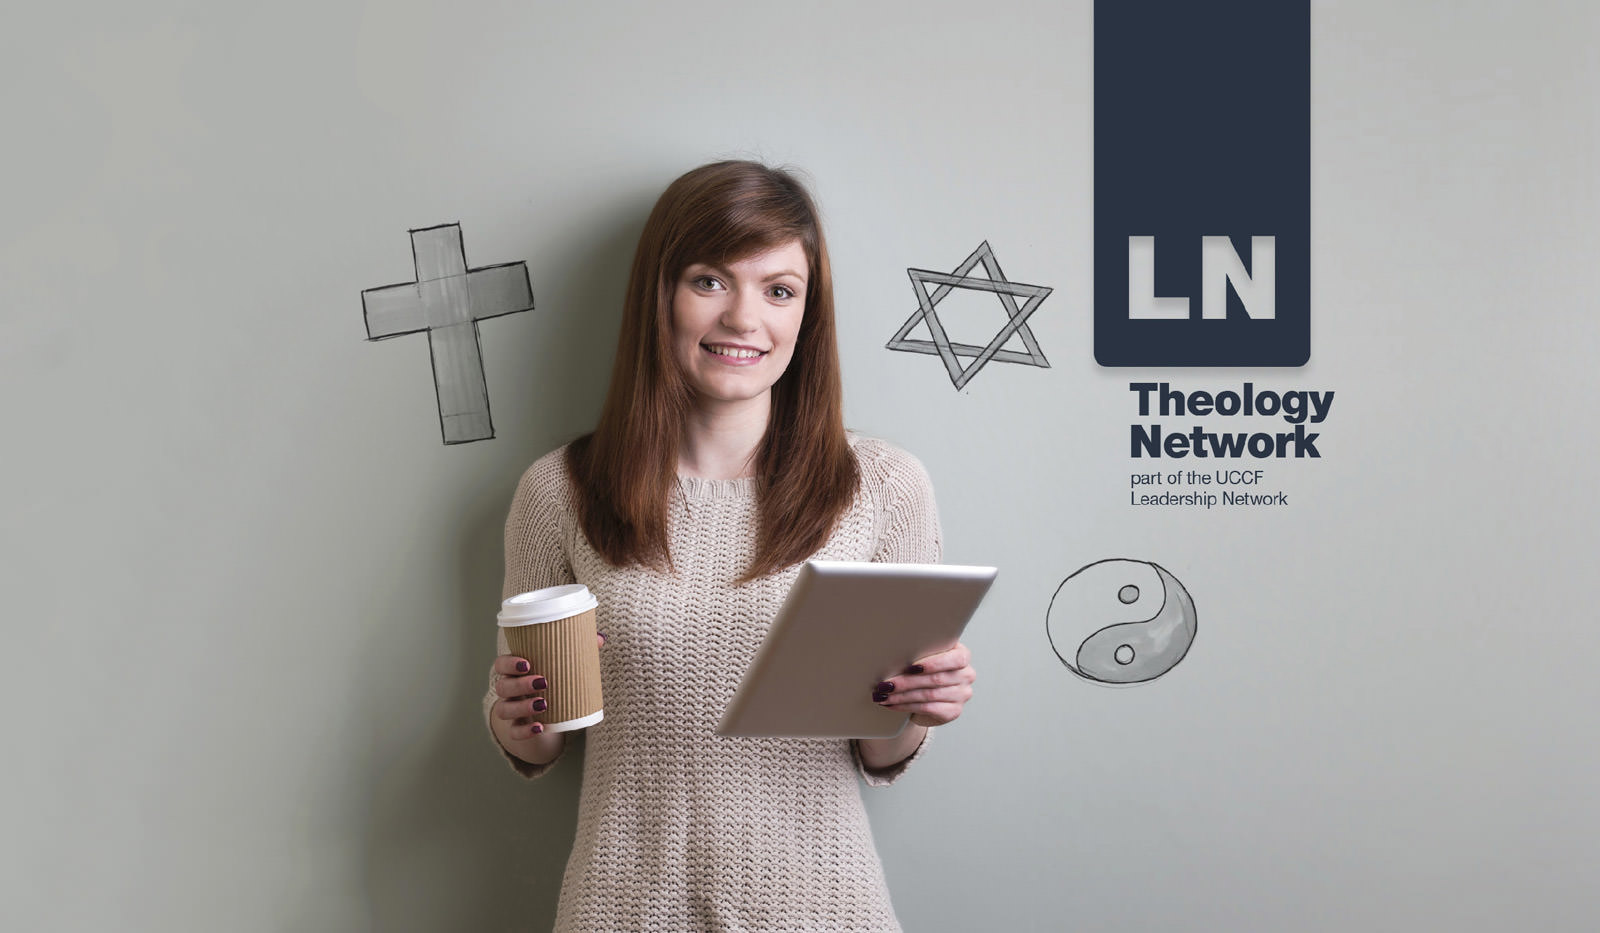 Leadership Network - Theology network